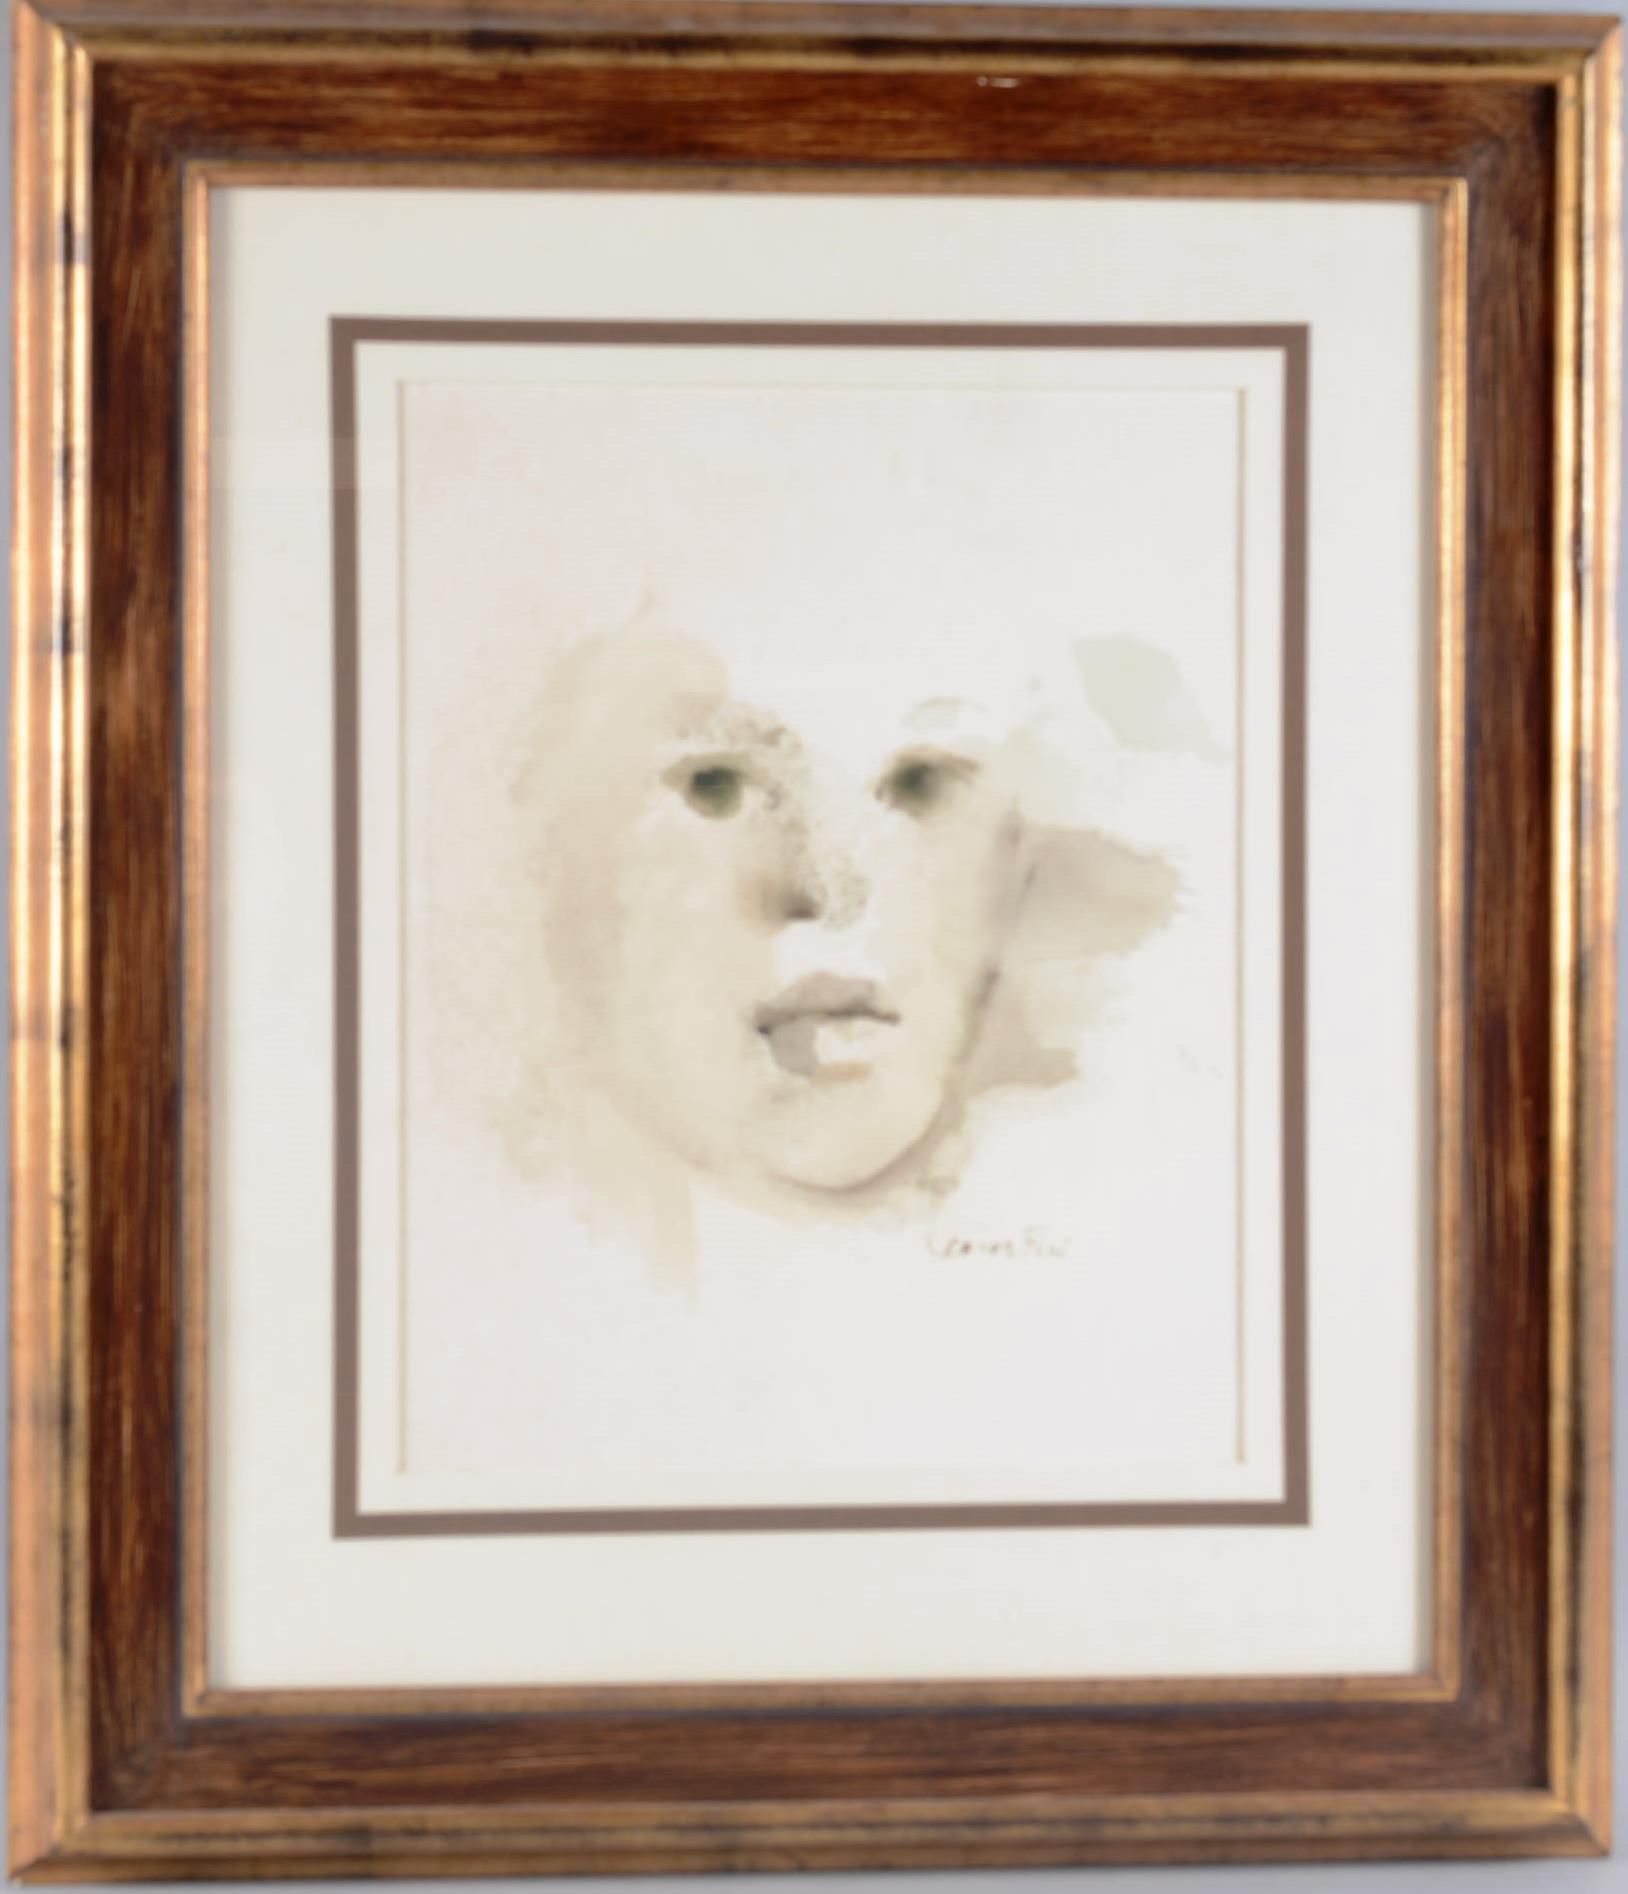 Léonor FINI (1907-1996) Leonor FINI (1907-1996)

" Gesicht"

Aquarell, unten rec&hellip;